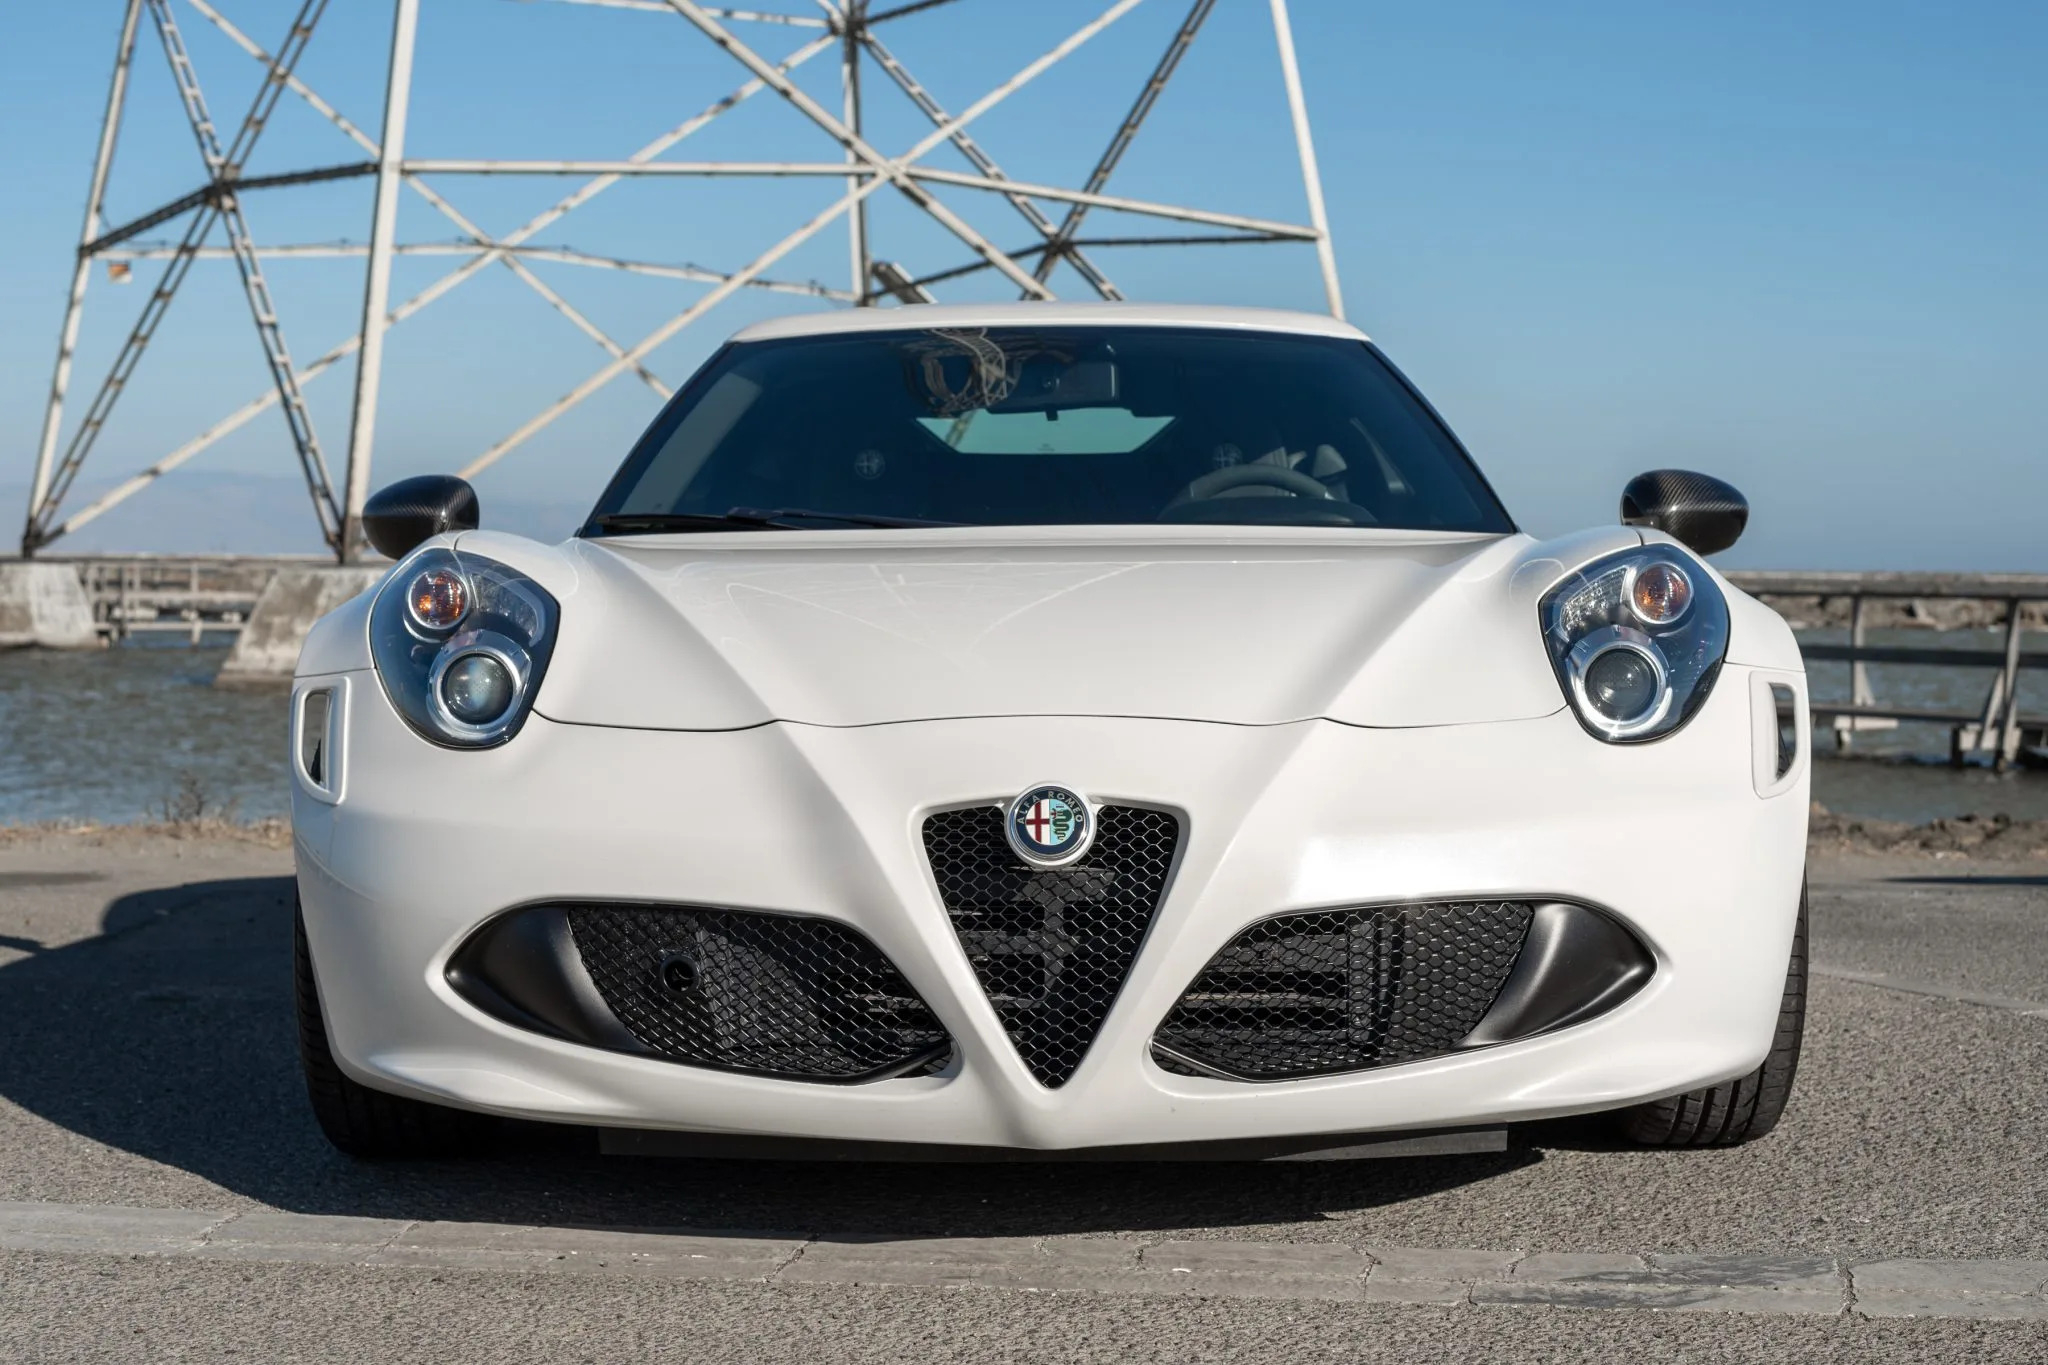 2015 Alfa Romeo 4C Launch Edition #443 of 500